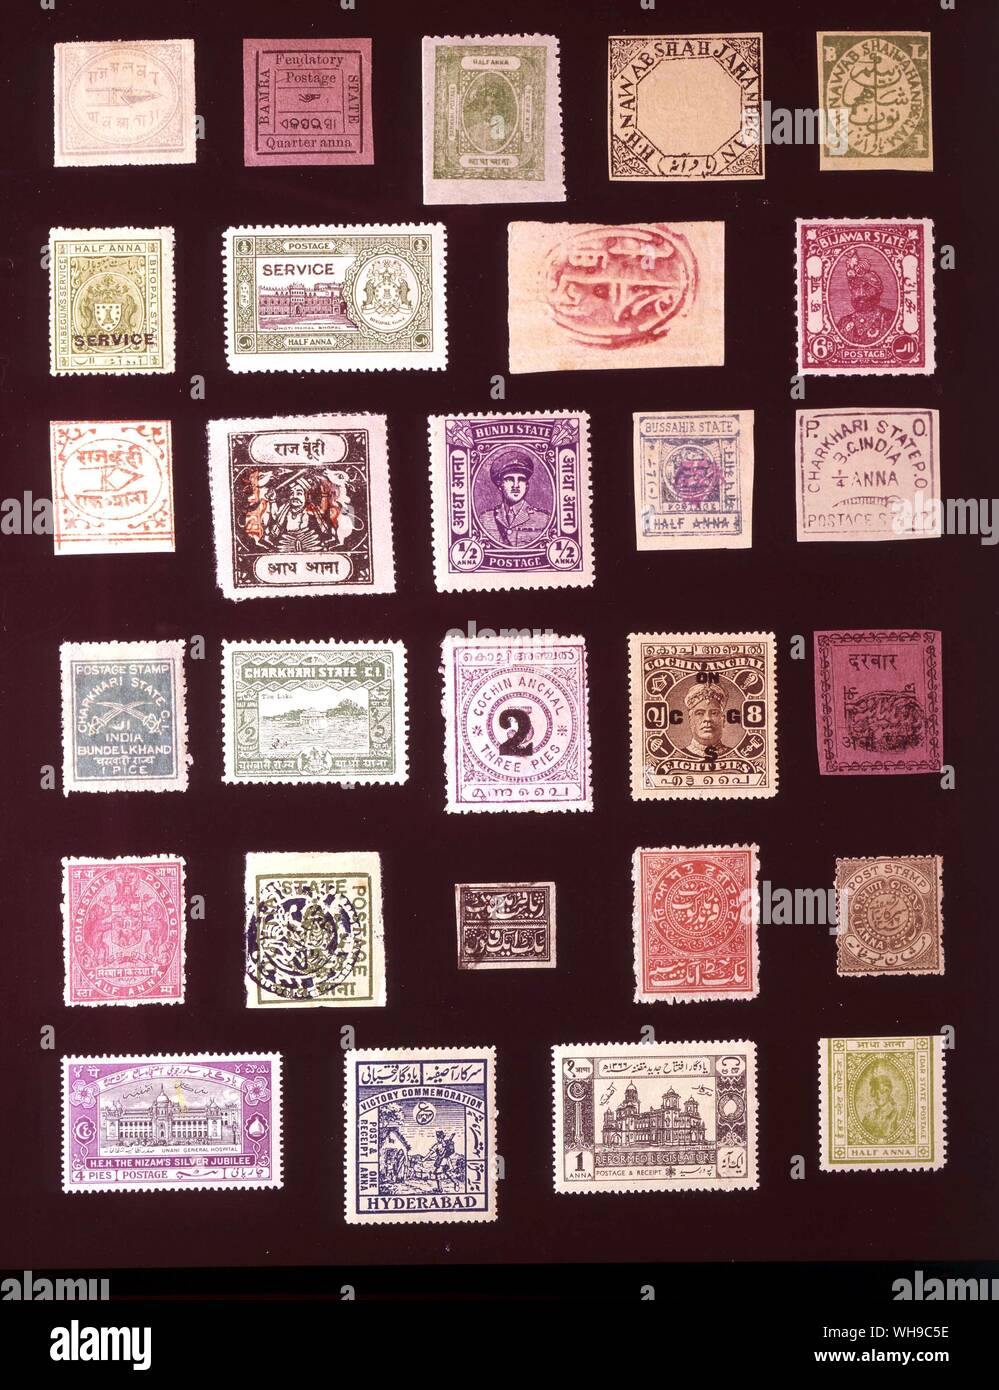 ASIA - indiano principesca di membri (pagina 1 di 2). (Da sinistra a destra) 1. Alwar, 0,25 anna, 1877, 2. Bamra, 1890, 0,25 anna 3. Barwani, 0,5 anna, 1921, 4. Bhopal, 0,25 anna, 1889, 5. Bhopal, 0,25 anna, 1896, 6. Bhopal, 0,25 anna, 1908, 7. Bhopal, 0,5 anna, 1936, 8. Bhor, 0,5 anna, 1879, 9. Bijawar, 6 torte, 1935, 10. Bundi, 1 anna, 1898, 11. Bundi. 0.5 Anna, 1918, 12. Bundi, 0,5 anna, 1947, 13. Bussahir, 0,5 anna, 1900, 14. Charkari, 0,25 anna, 1894, 15. Charkari, 1 pice, 1912, 16. Charkari, 0,5 anna, 1931, 17. Cochin, 2 torte, 1909, 18. Cochin, 8 torte, 1911, 19. Dhar, 0,5 Anna 1897, 20. Dhar, 0,5 anna, Foto Stock